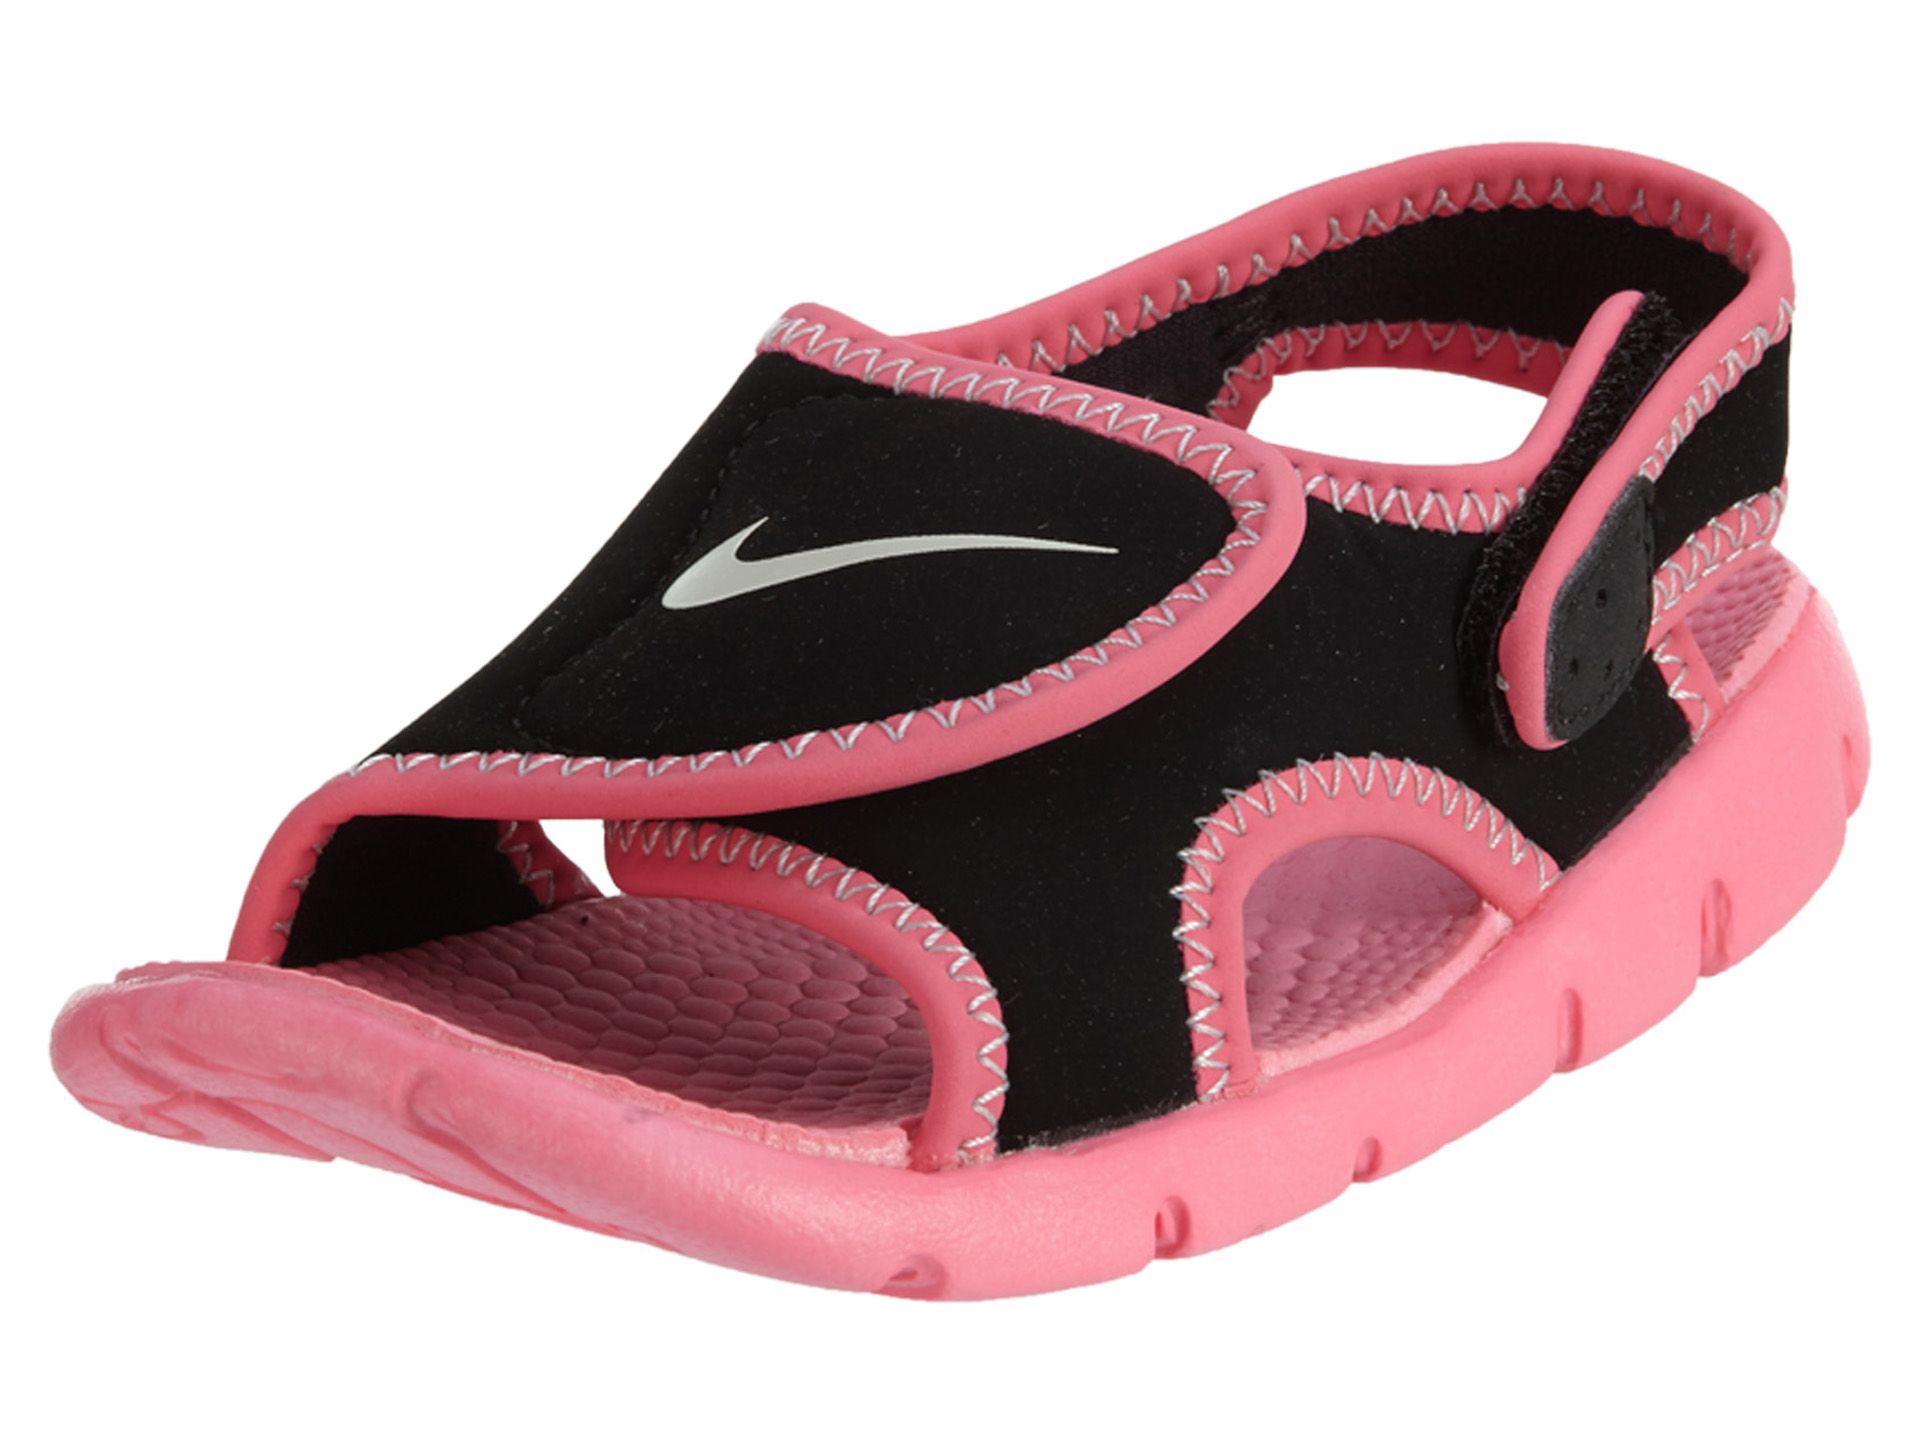 Nike Sunray Adjust 4 Toddlers Style 